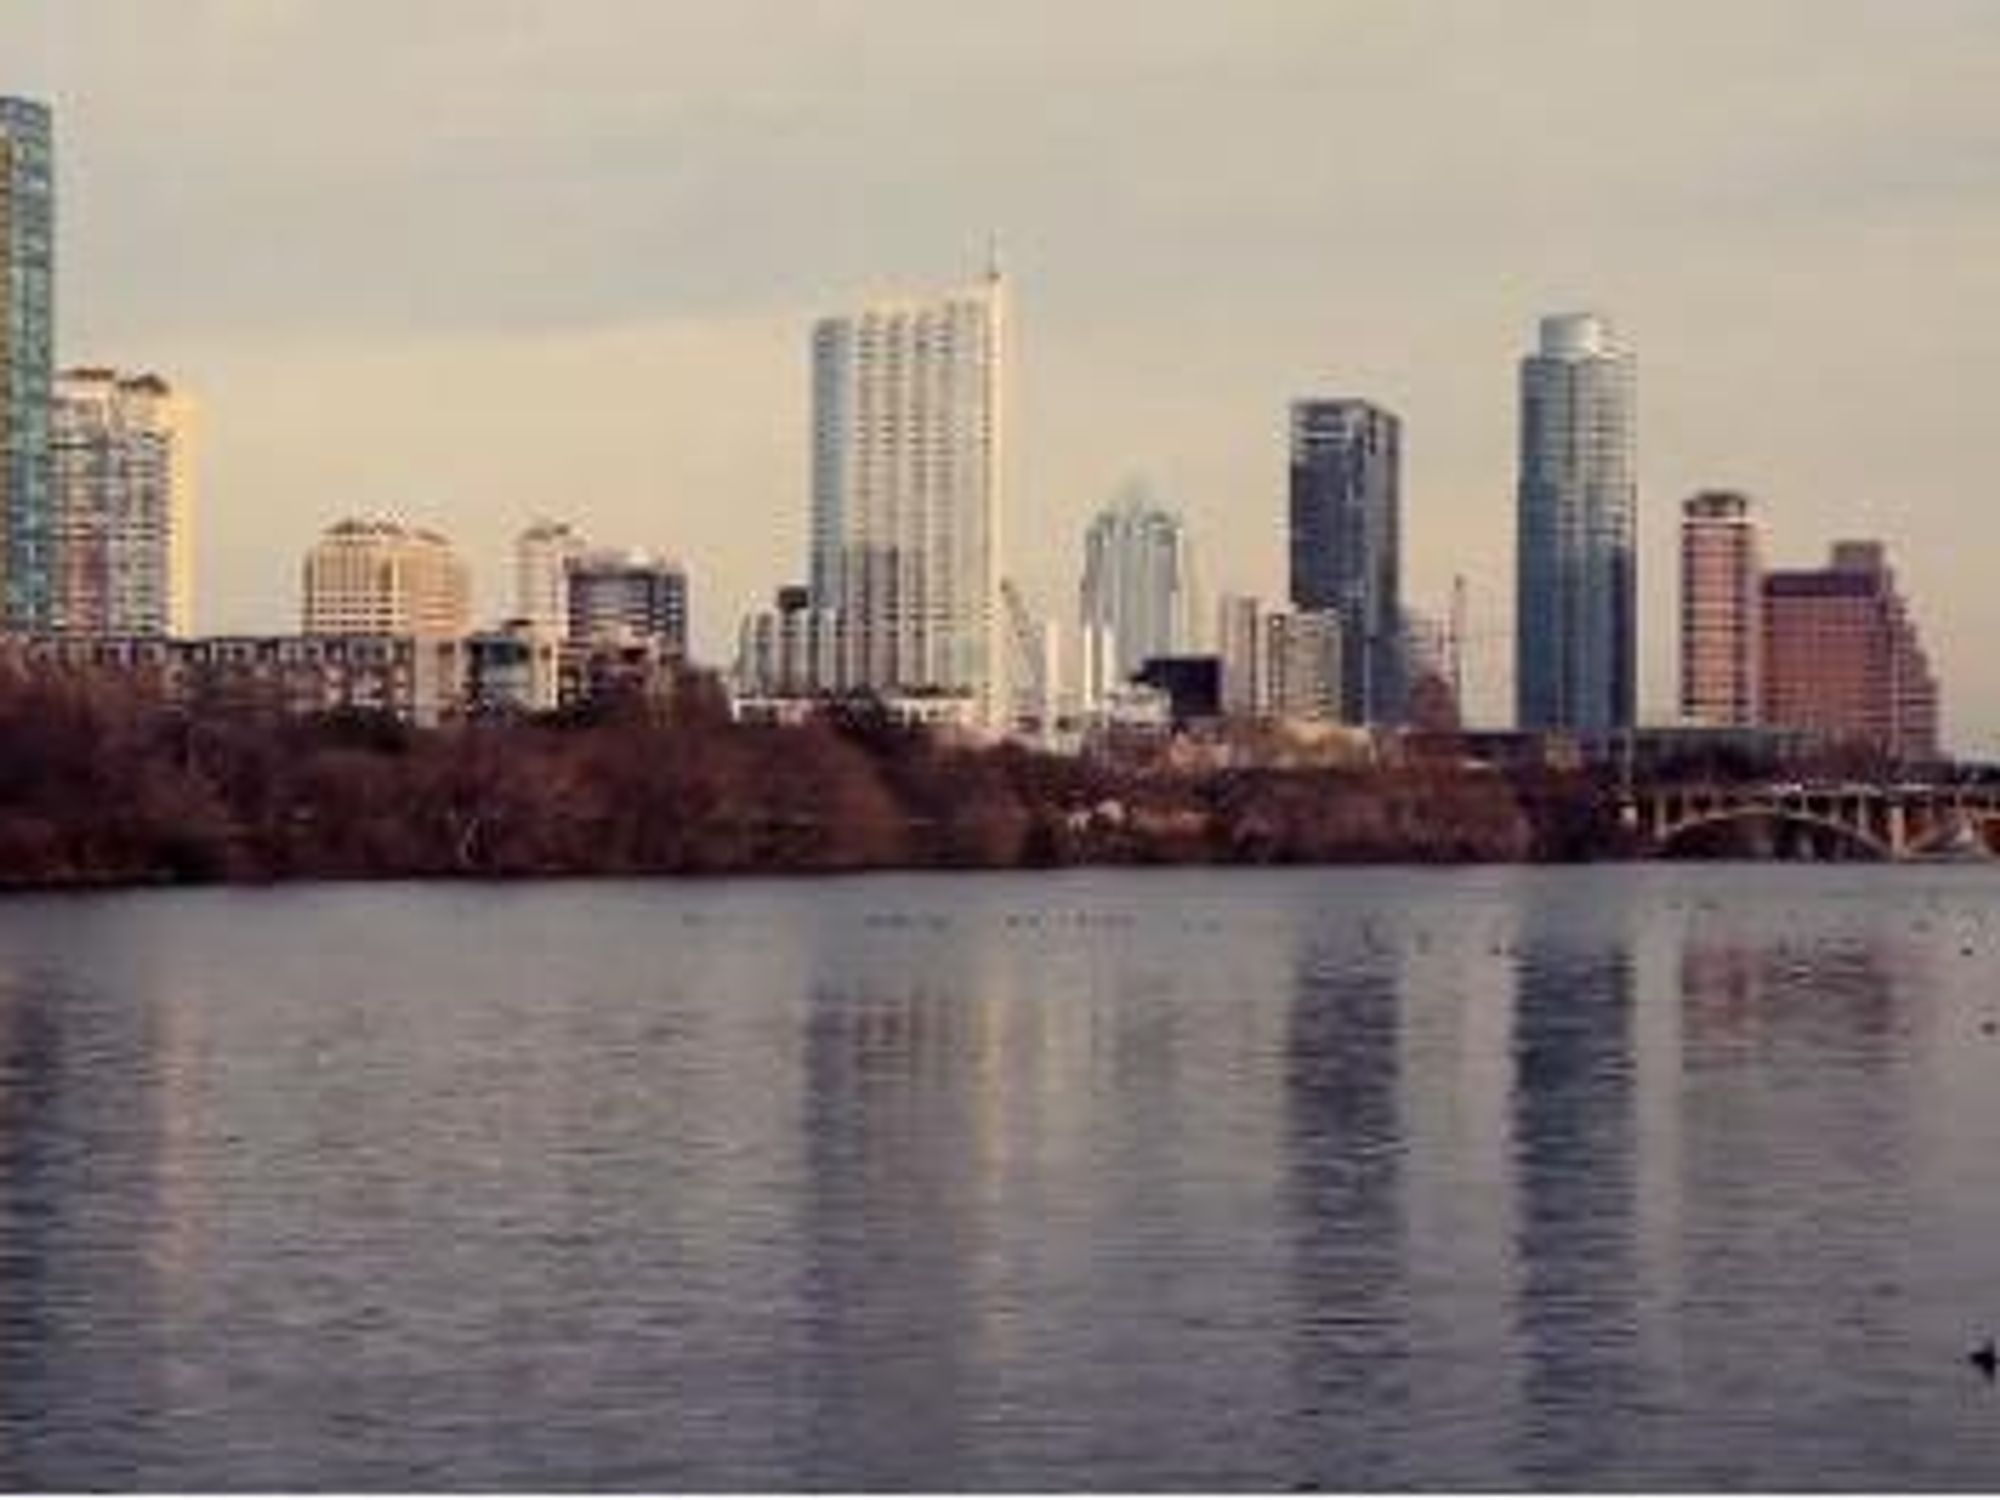 Austin Photo Set: News_kvue_366 days in 366 seconds_skyline